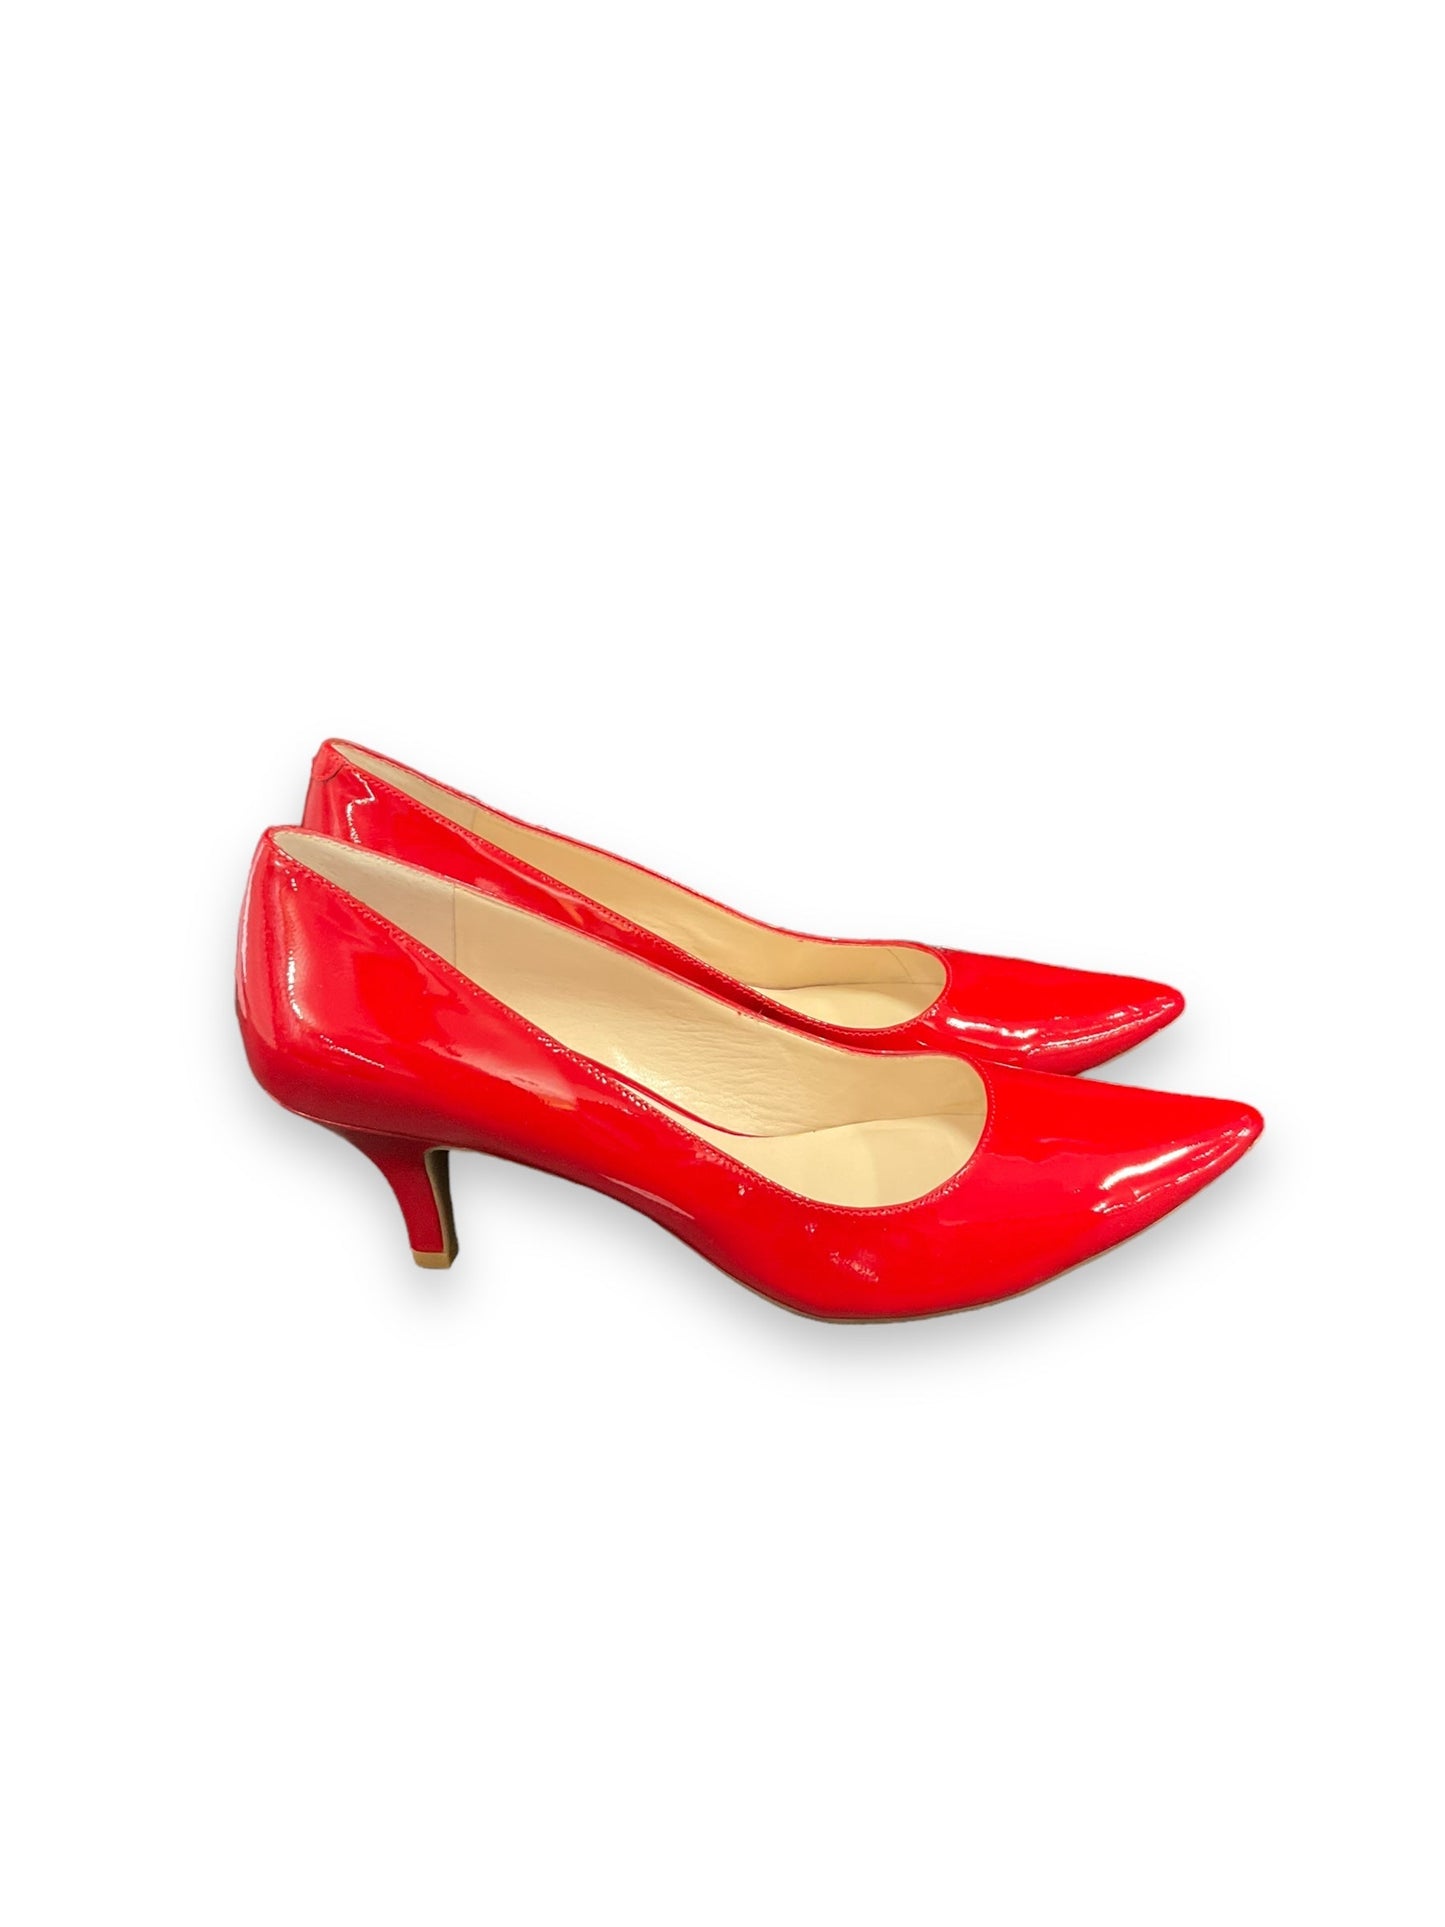 Red Shoes Heels Kitten Anne Klein, Size 8.5